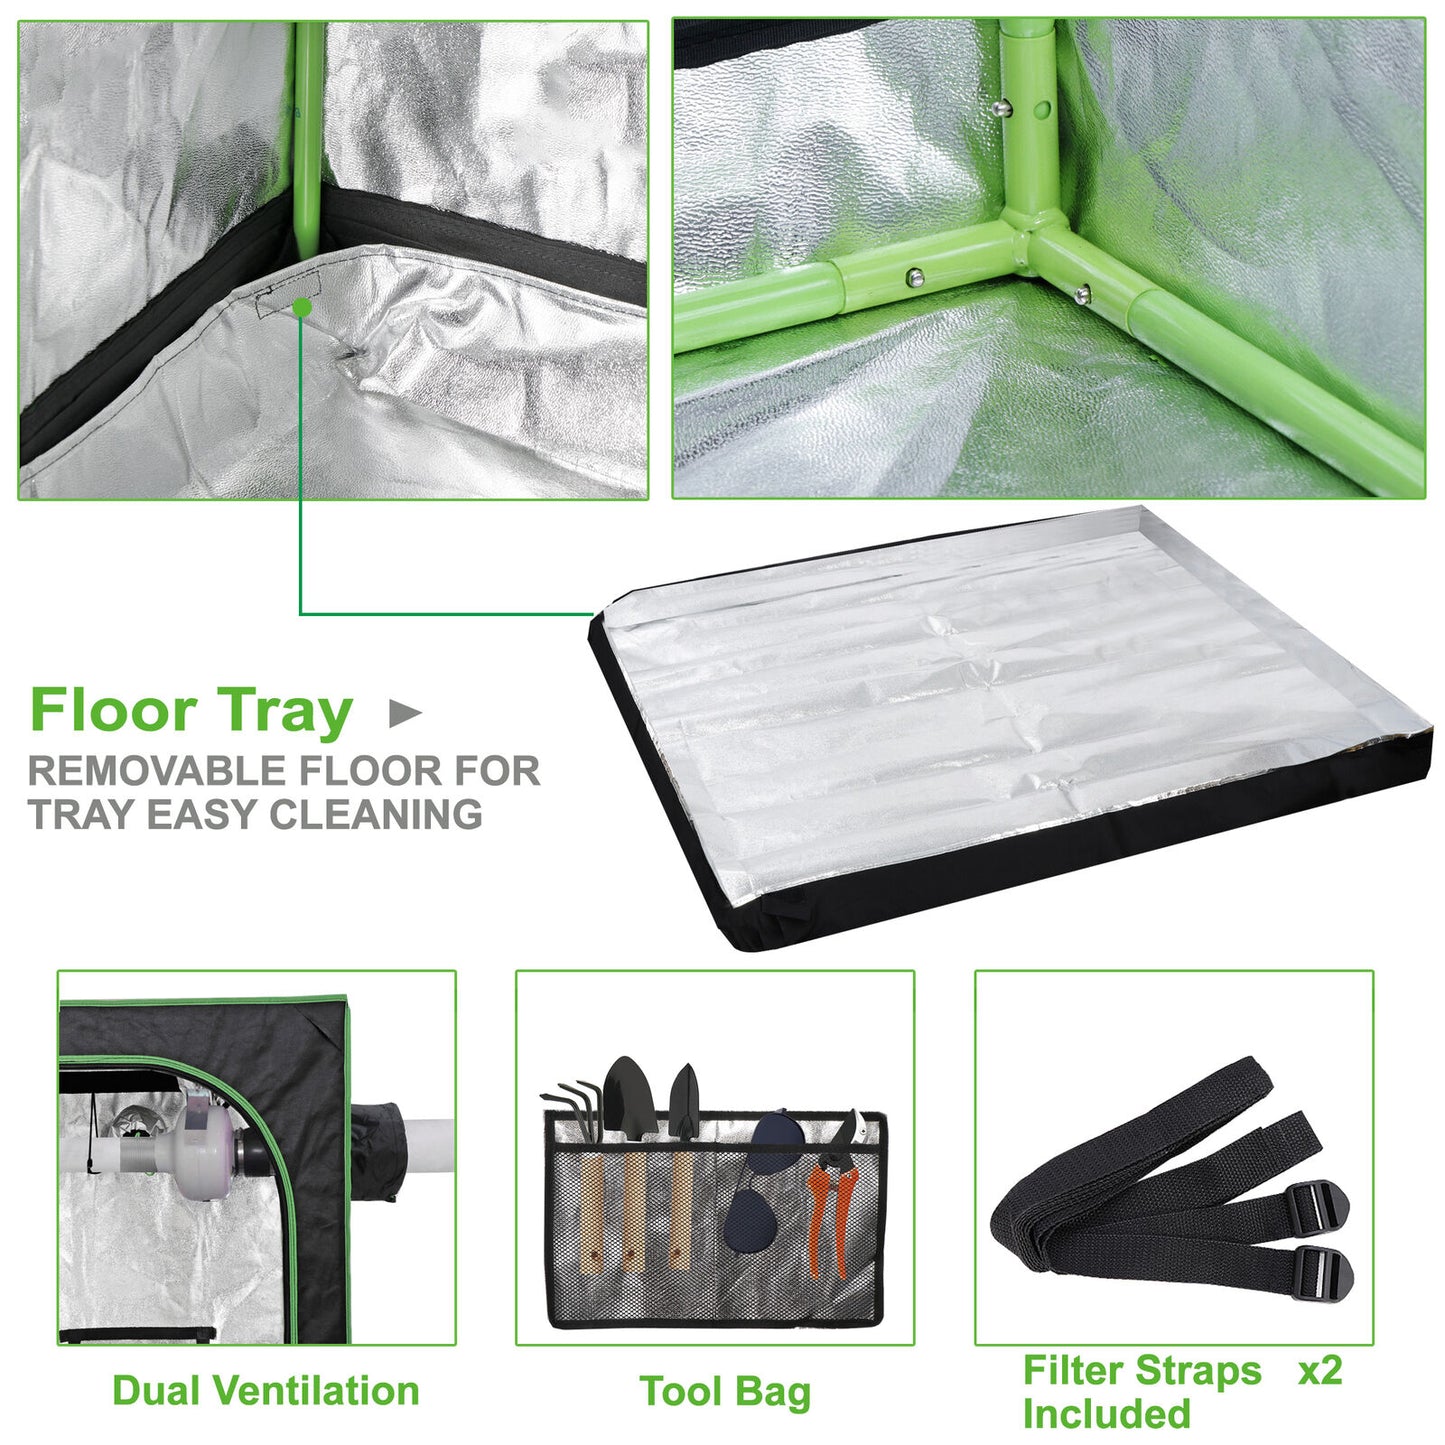 48"x48"x80" 100% Reflective Mylar Non Toxic Hydroponic Grow Tent Indoor Room